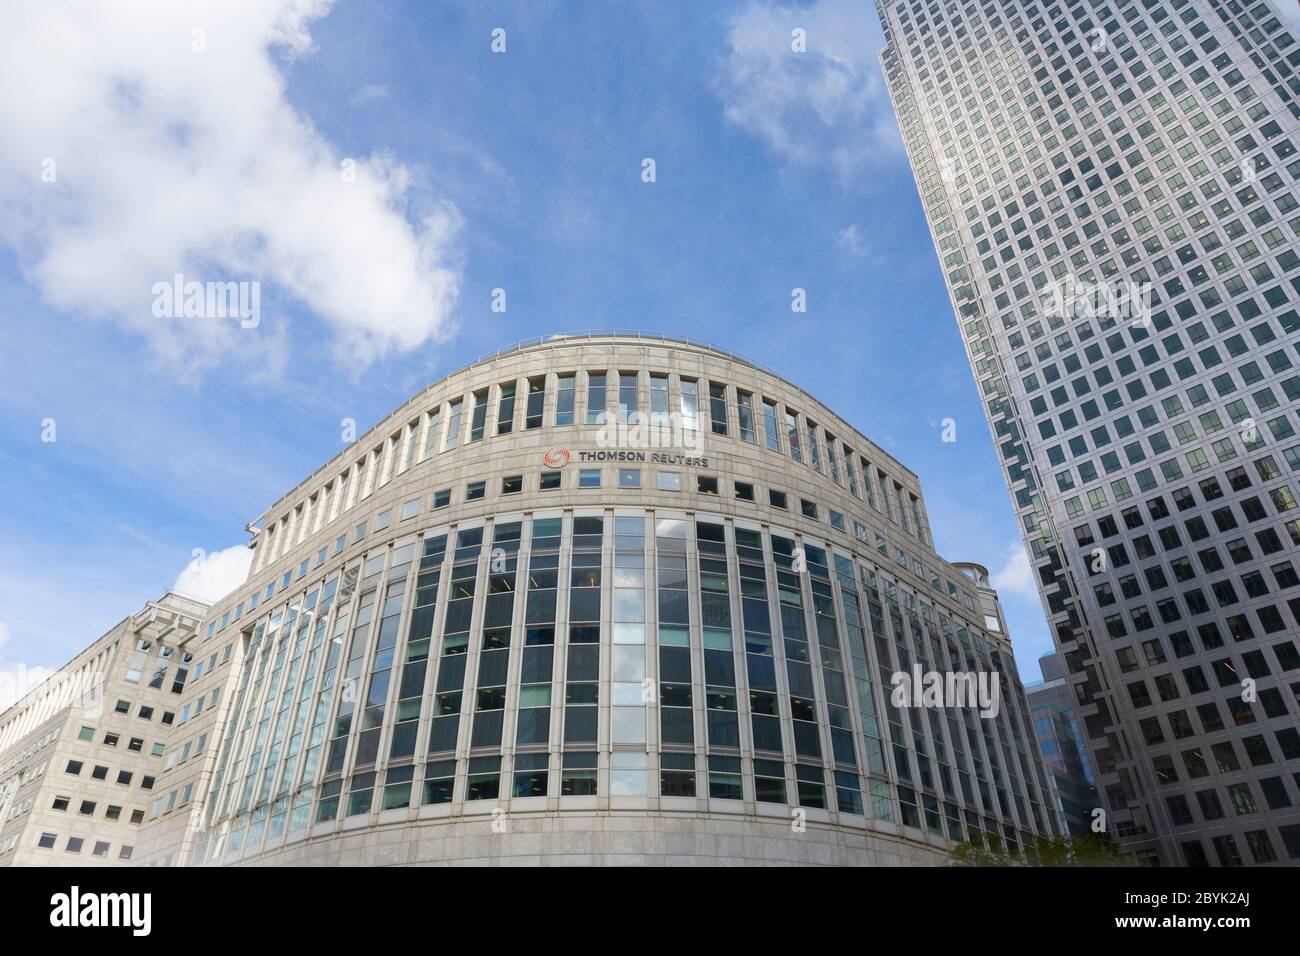 Thomson Reuters building, London, UK Stock Photo